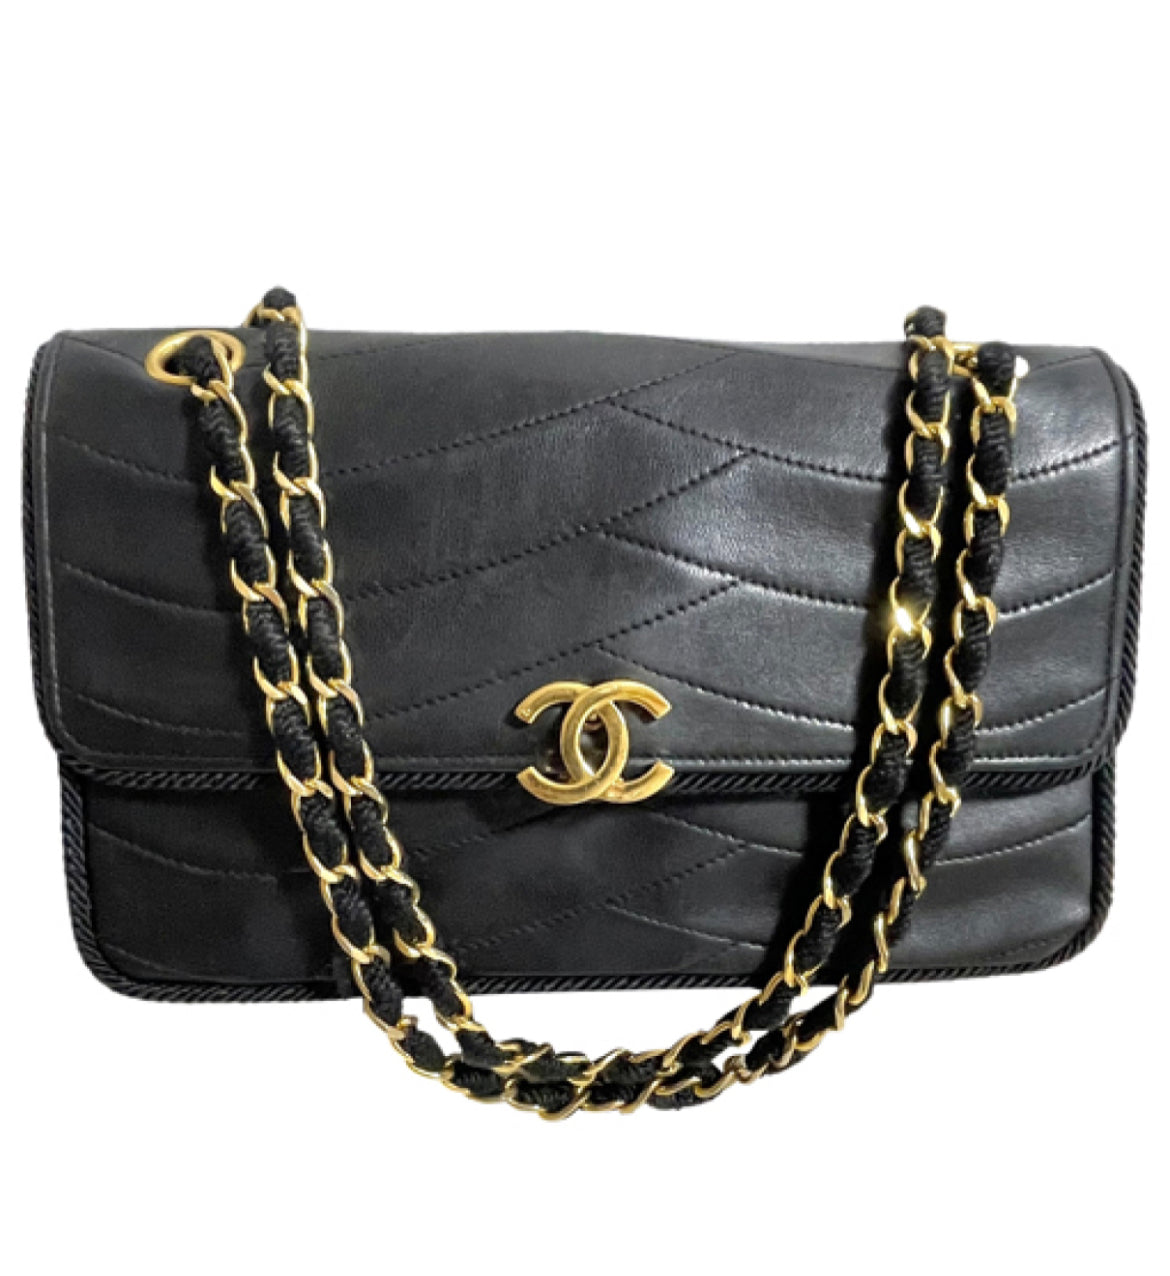 Very Very Rare Vintage Chanel handbag